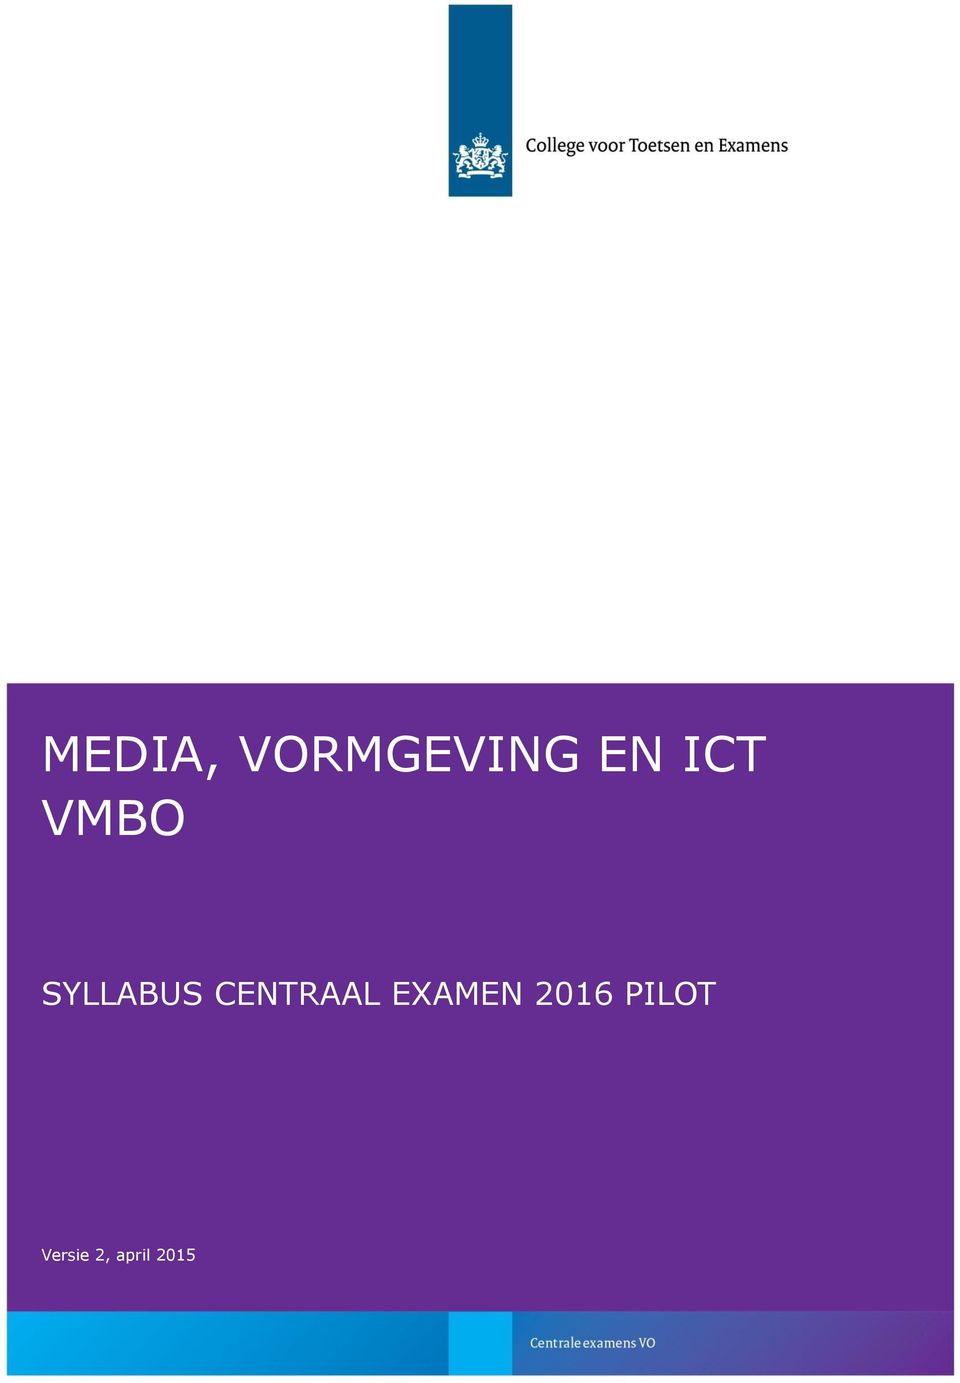 ICT VMBO